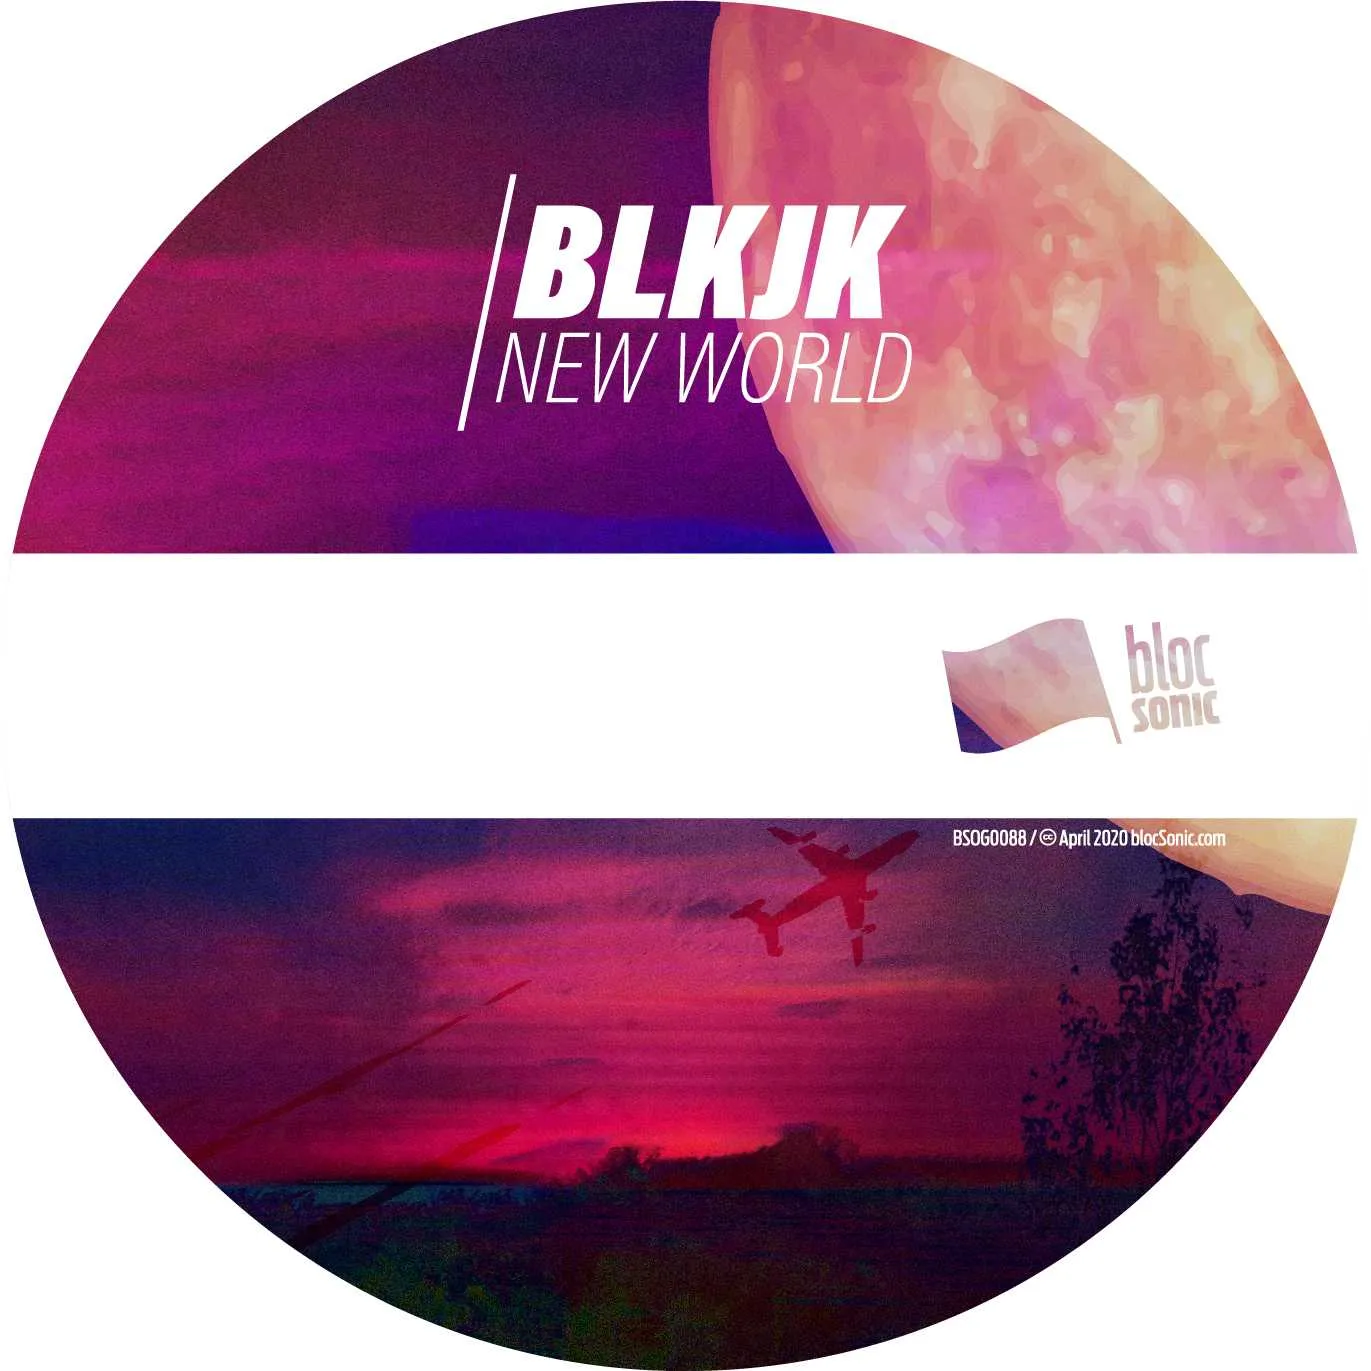 Album disc for “New World” by BLKJK